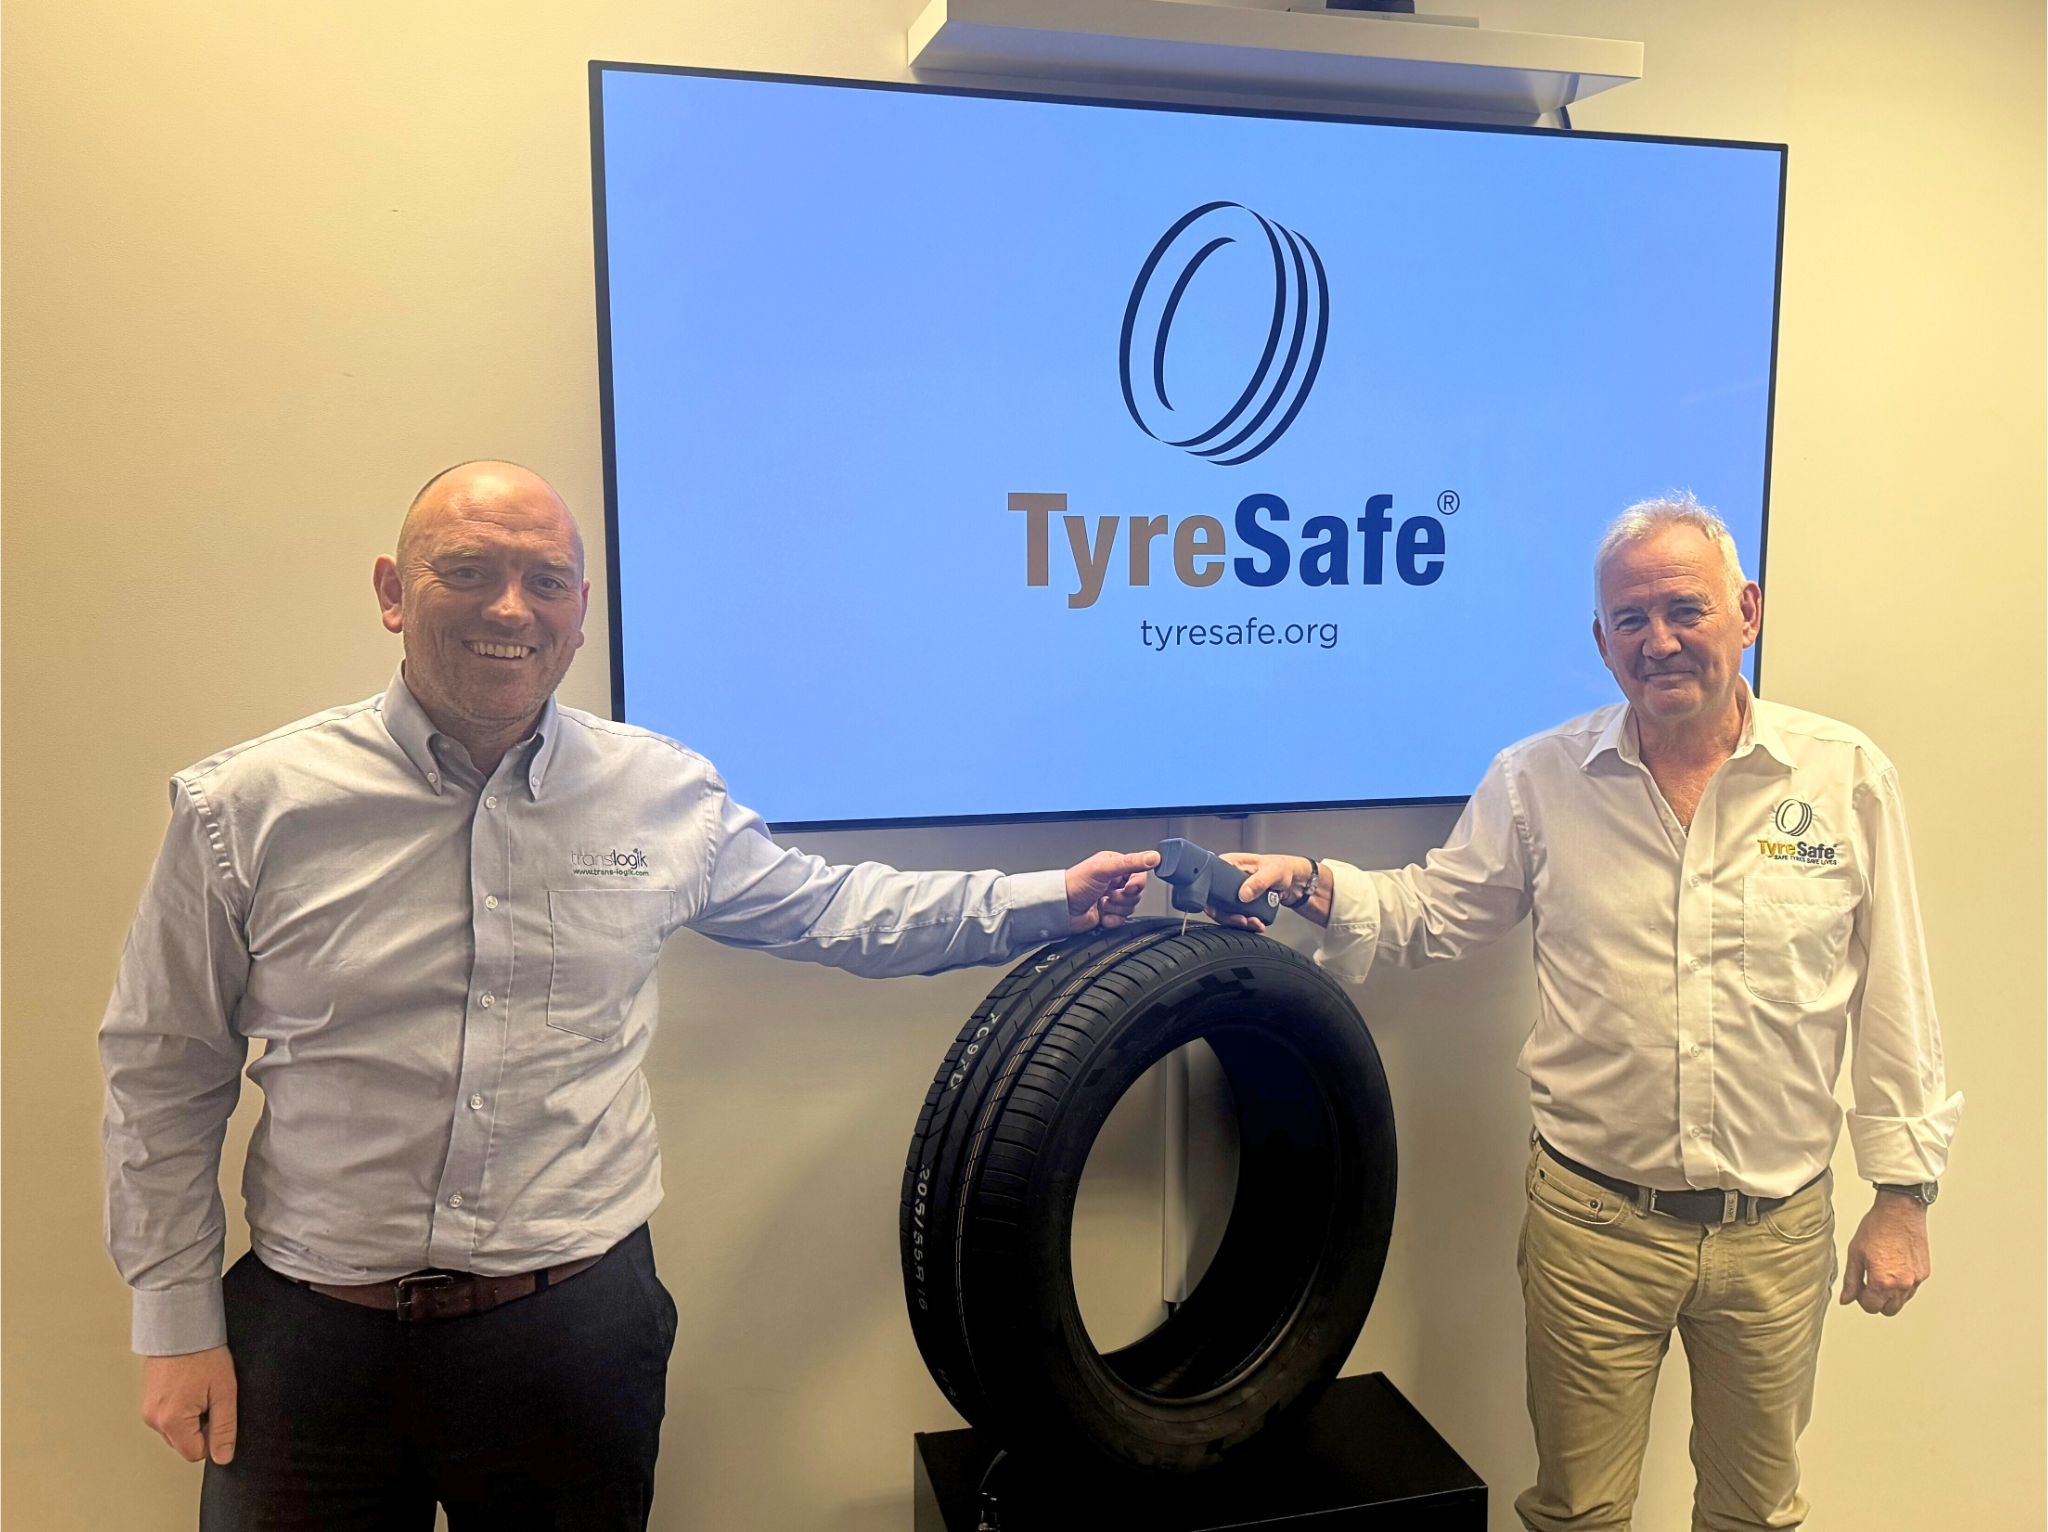 Translogik provides TyreSafe with access to tyre inspection technology